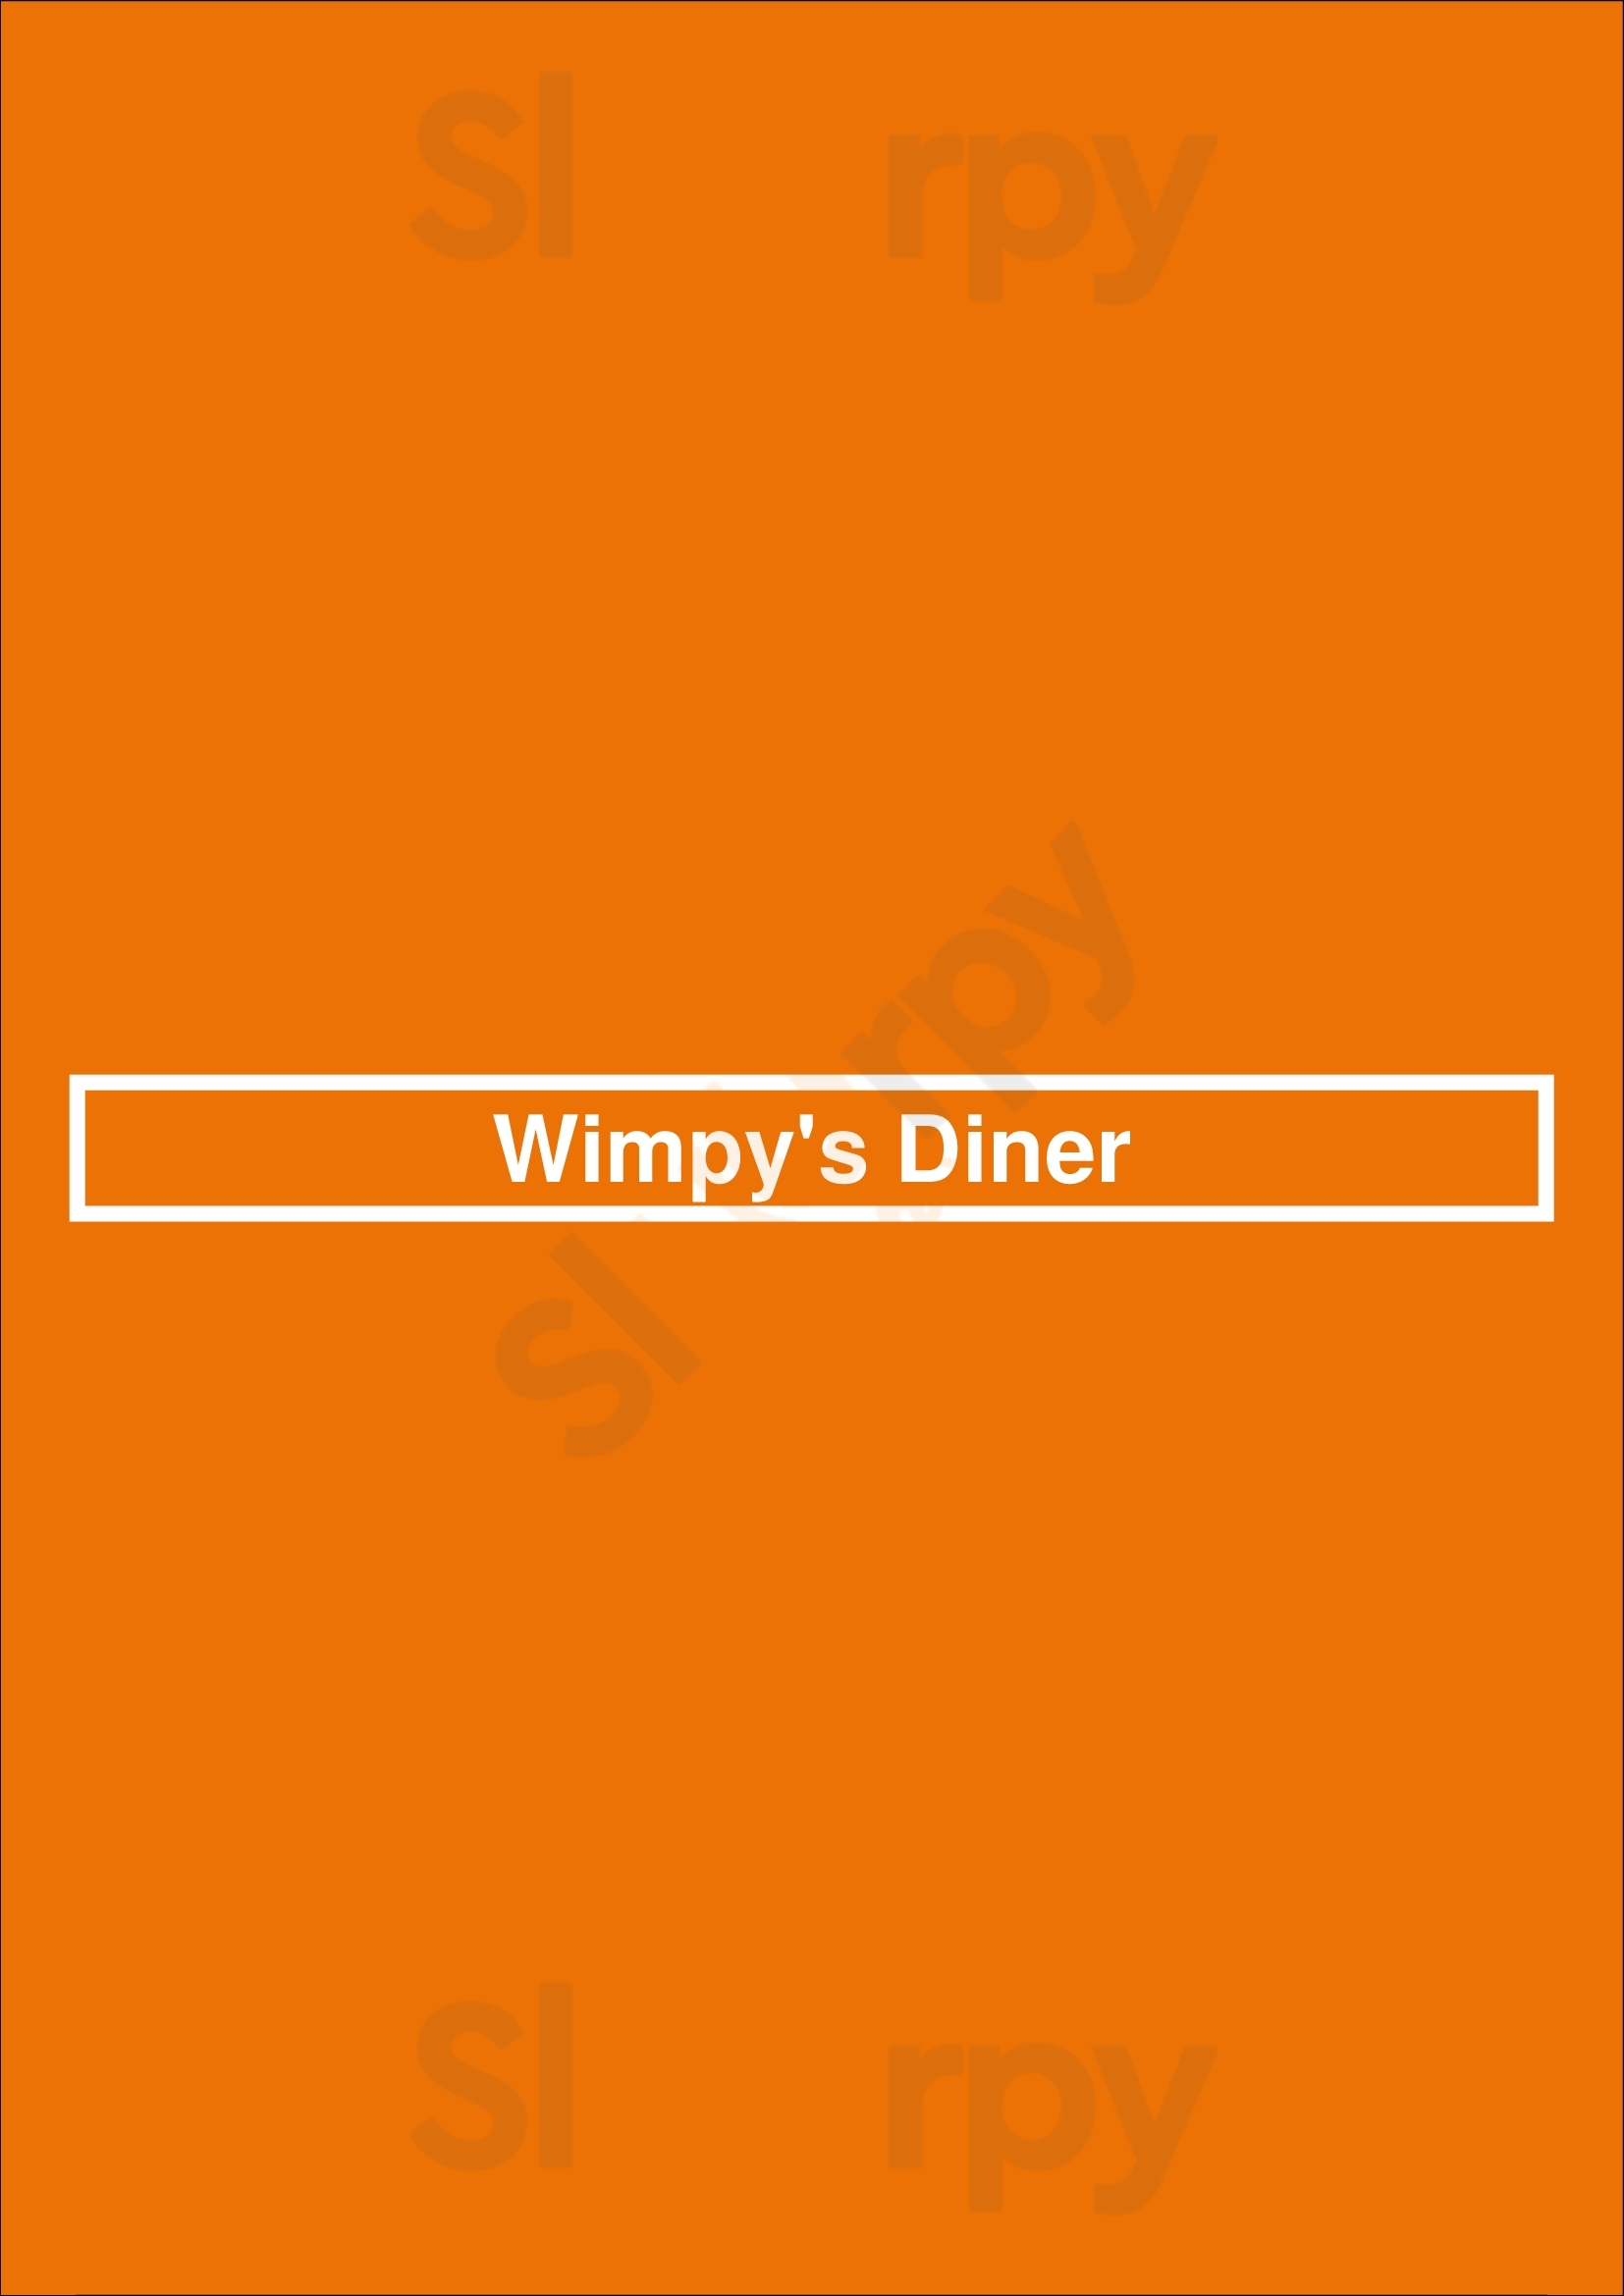 Wimpy's Diner Hamilton Menu - 1